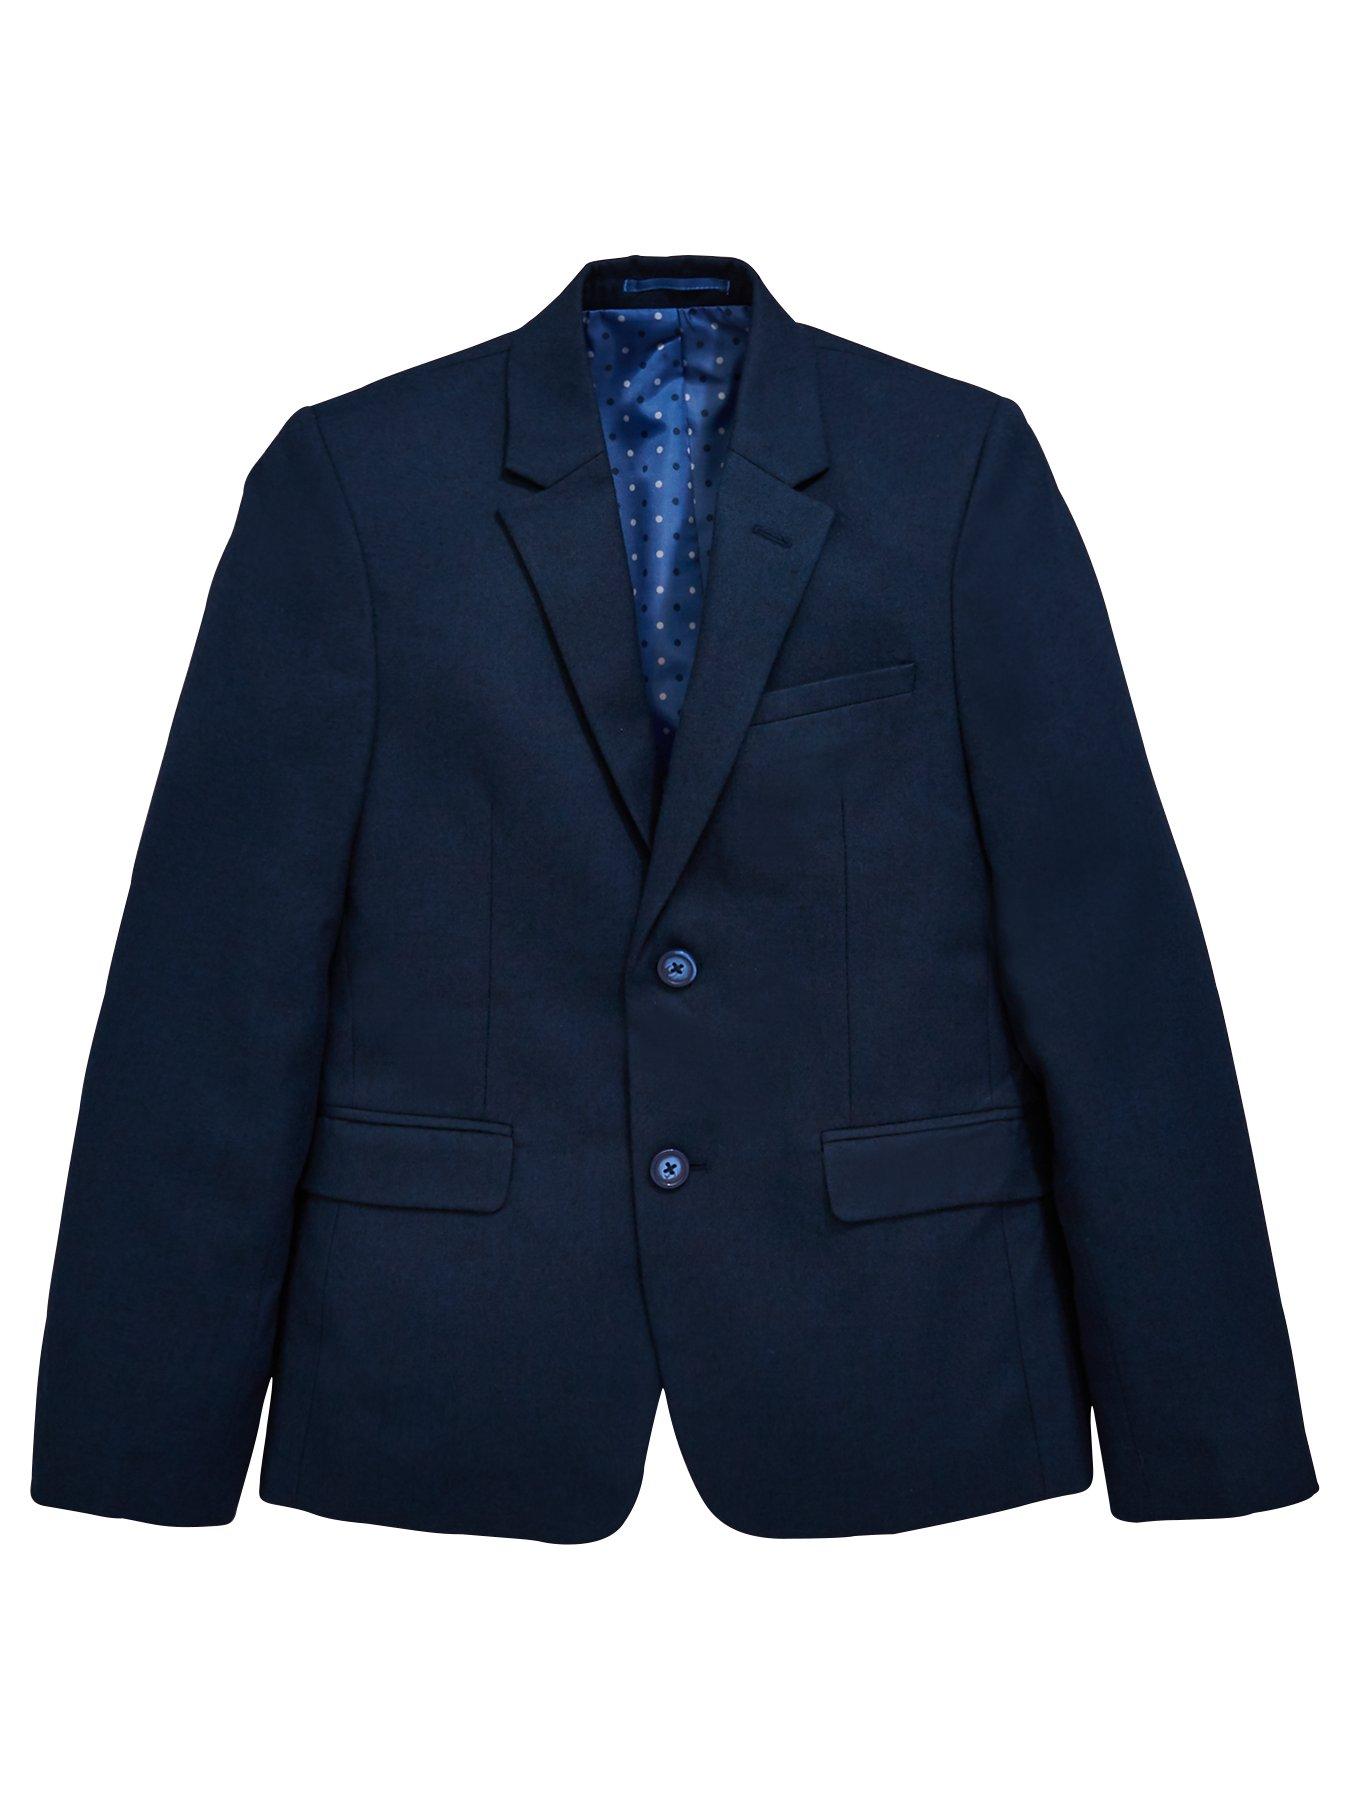 Boys Jackets & Coats | Boys Clothes | very.co.uk